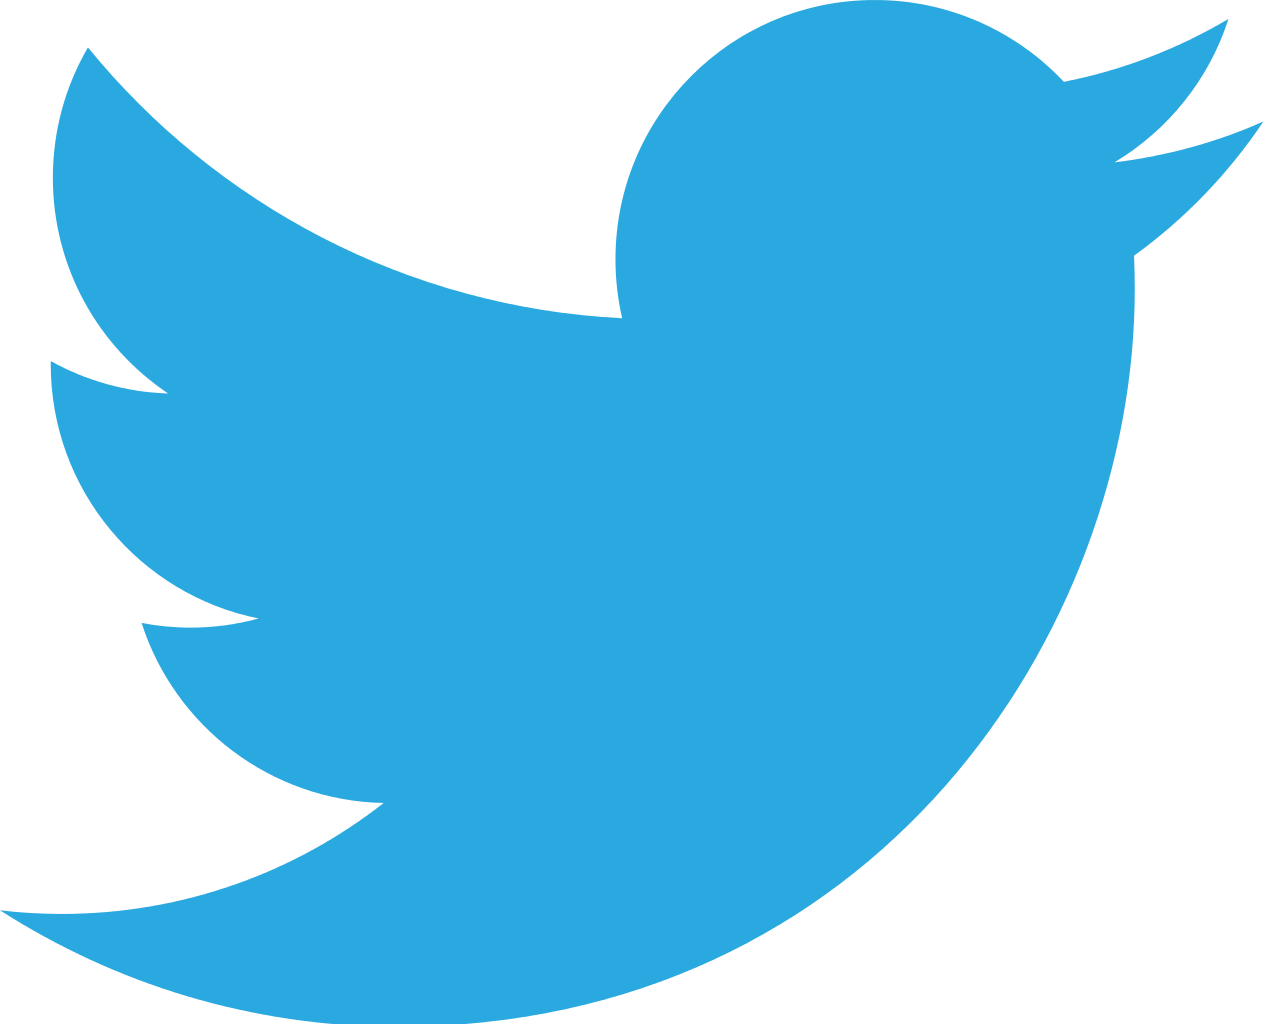 1267px-Twitter_bird_logo_2012.svg